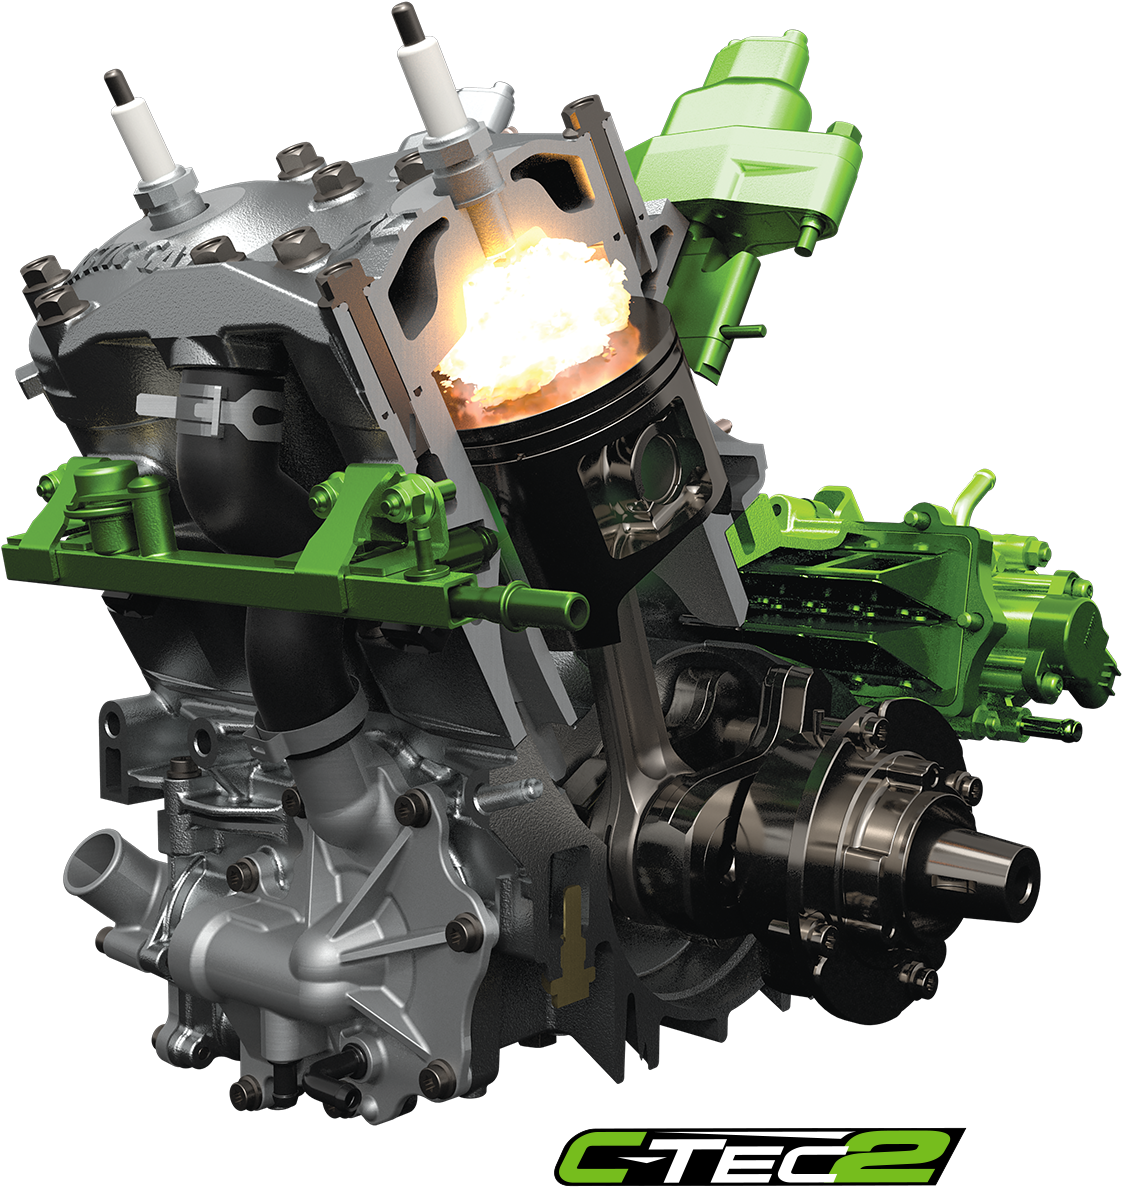 8000 C-tec2 Engine With Dsi - Arctic Cat M8000 2018 (1430x1375), Png Download